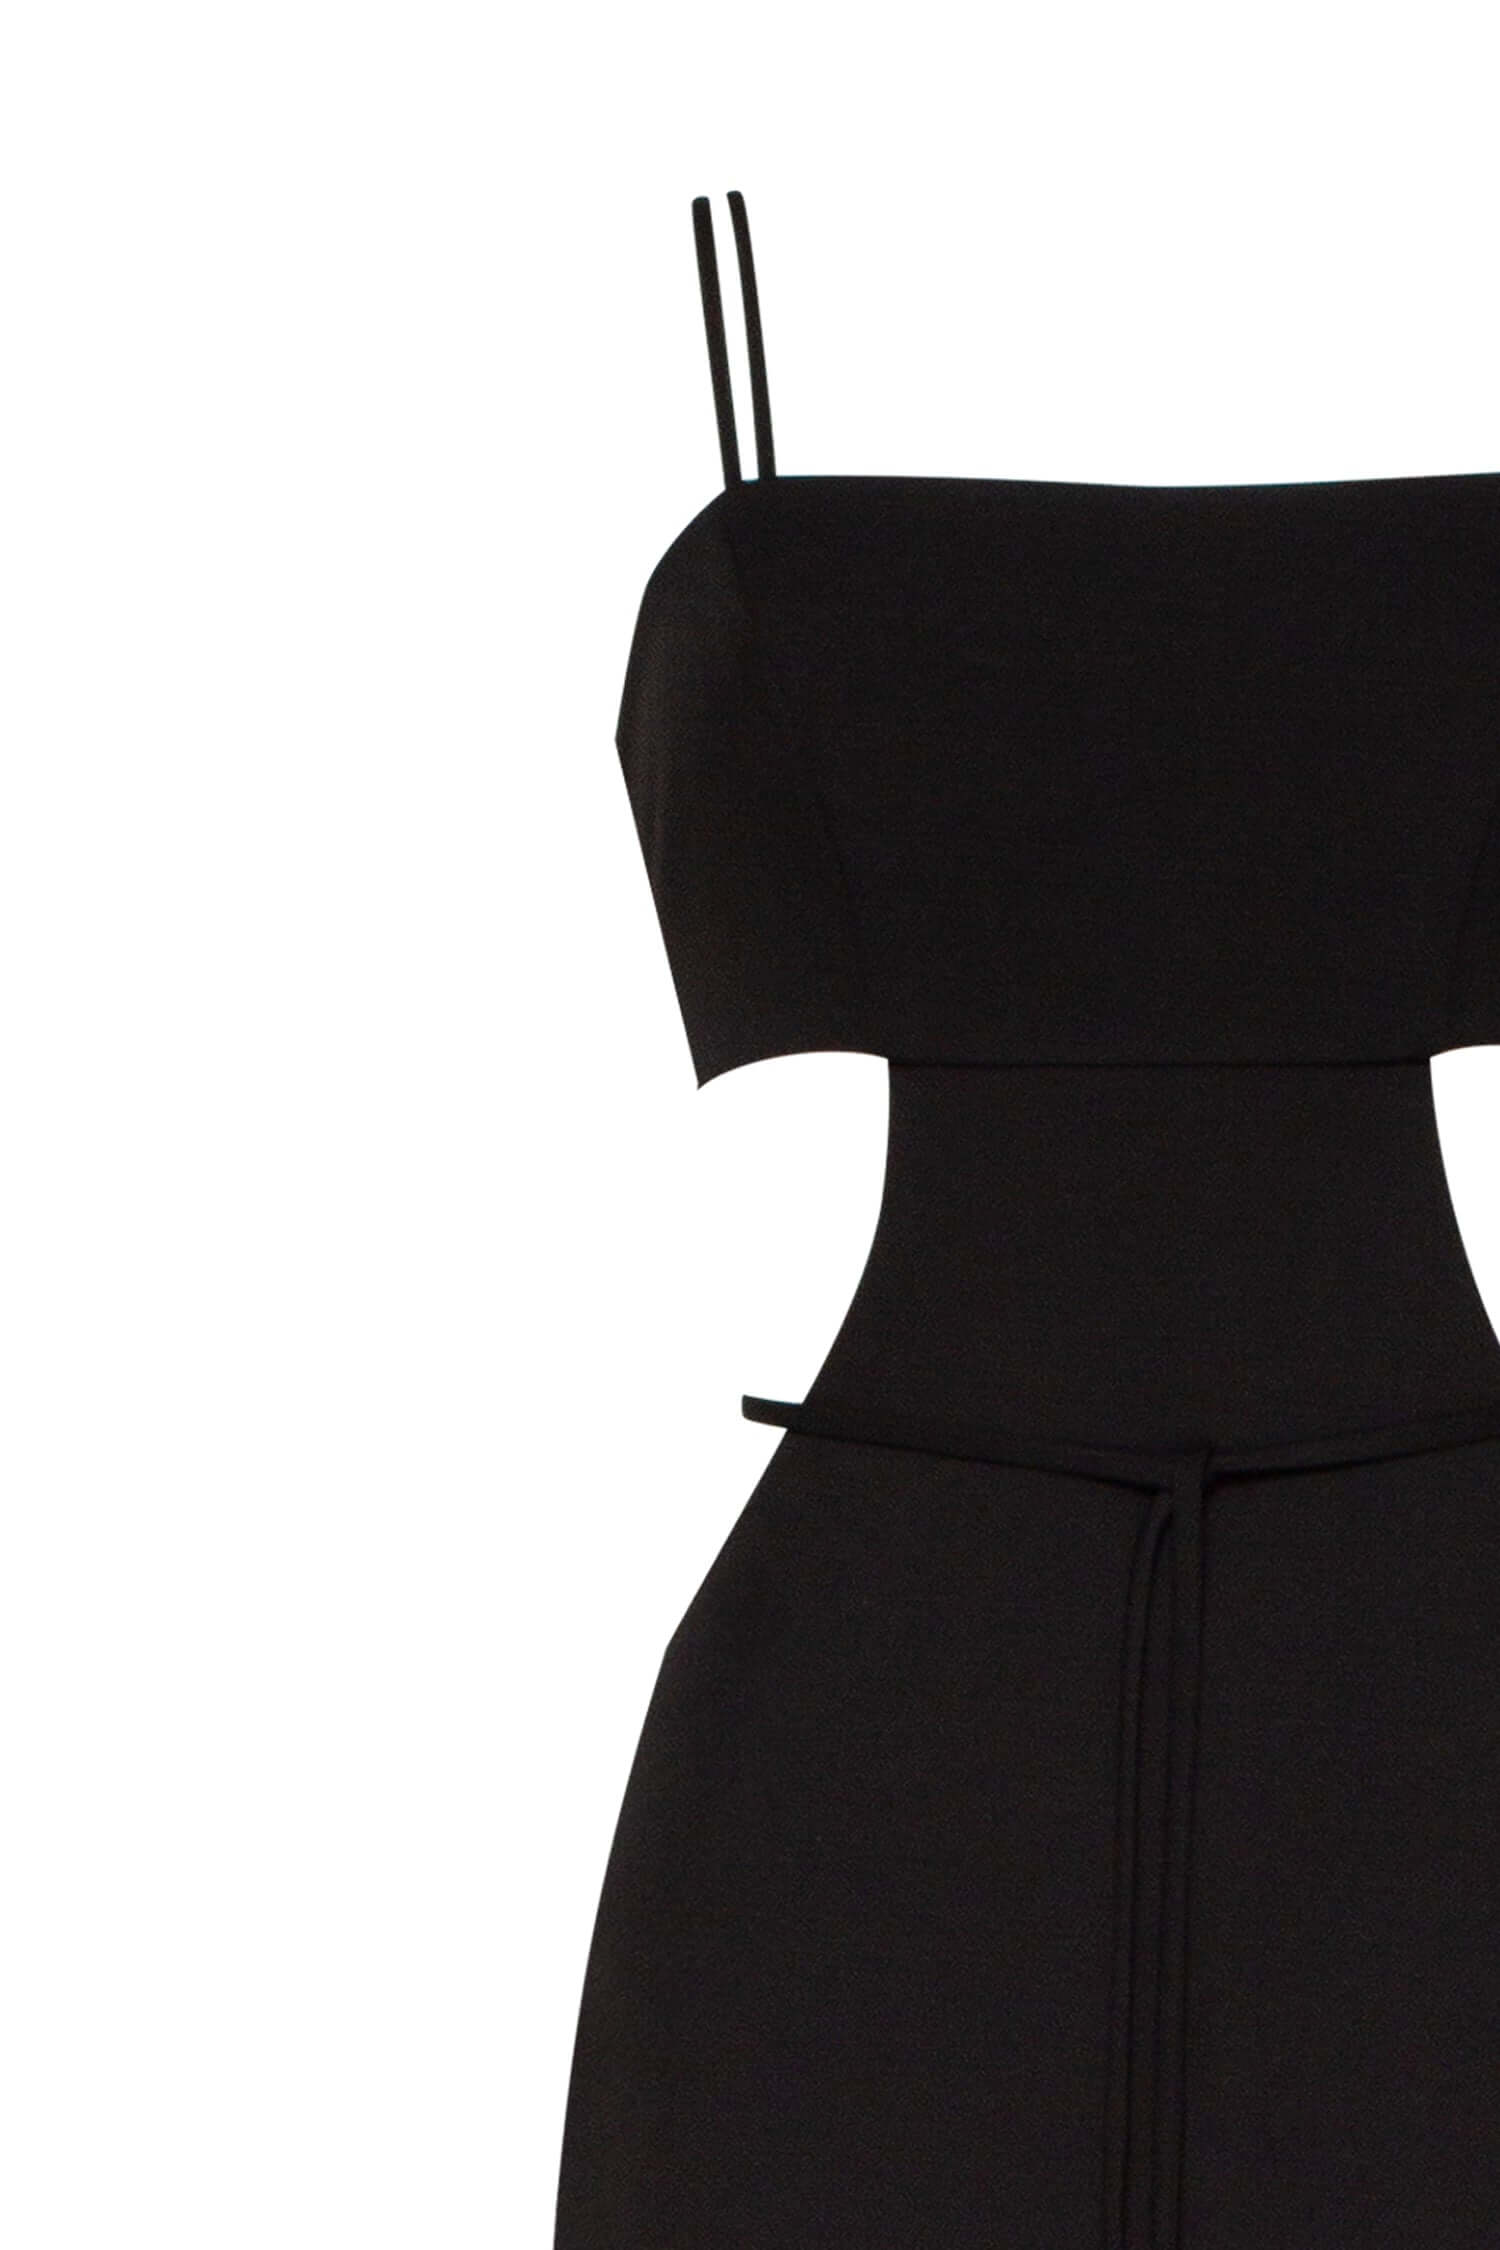 Stylish and Versatile: Ways to Wear a Little Black Dress